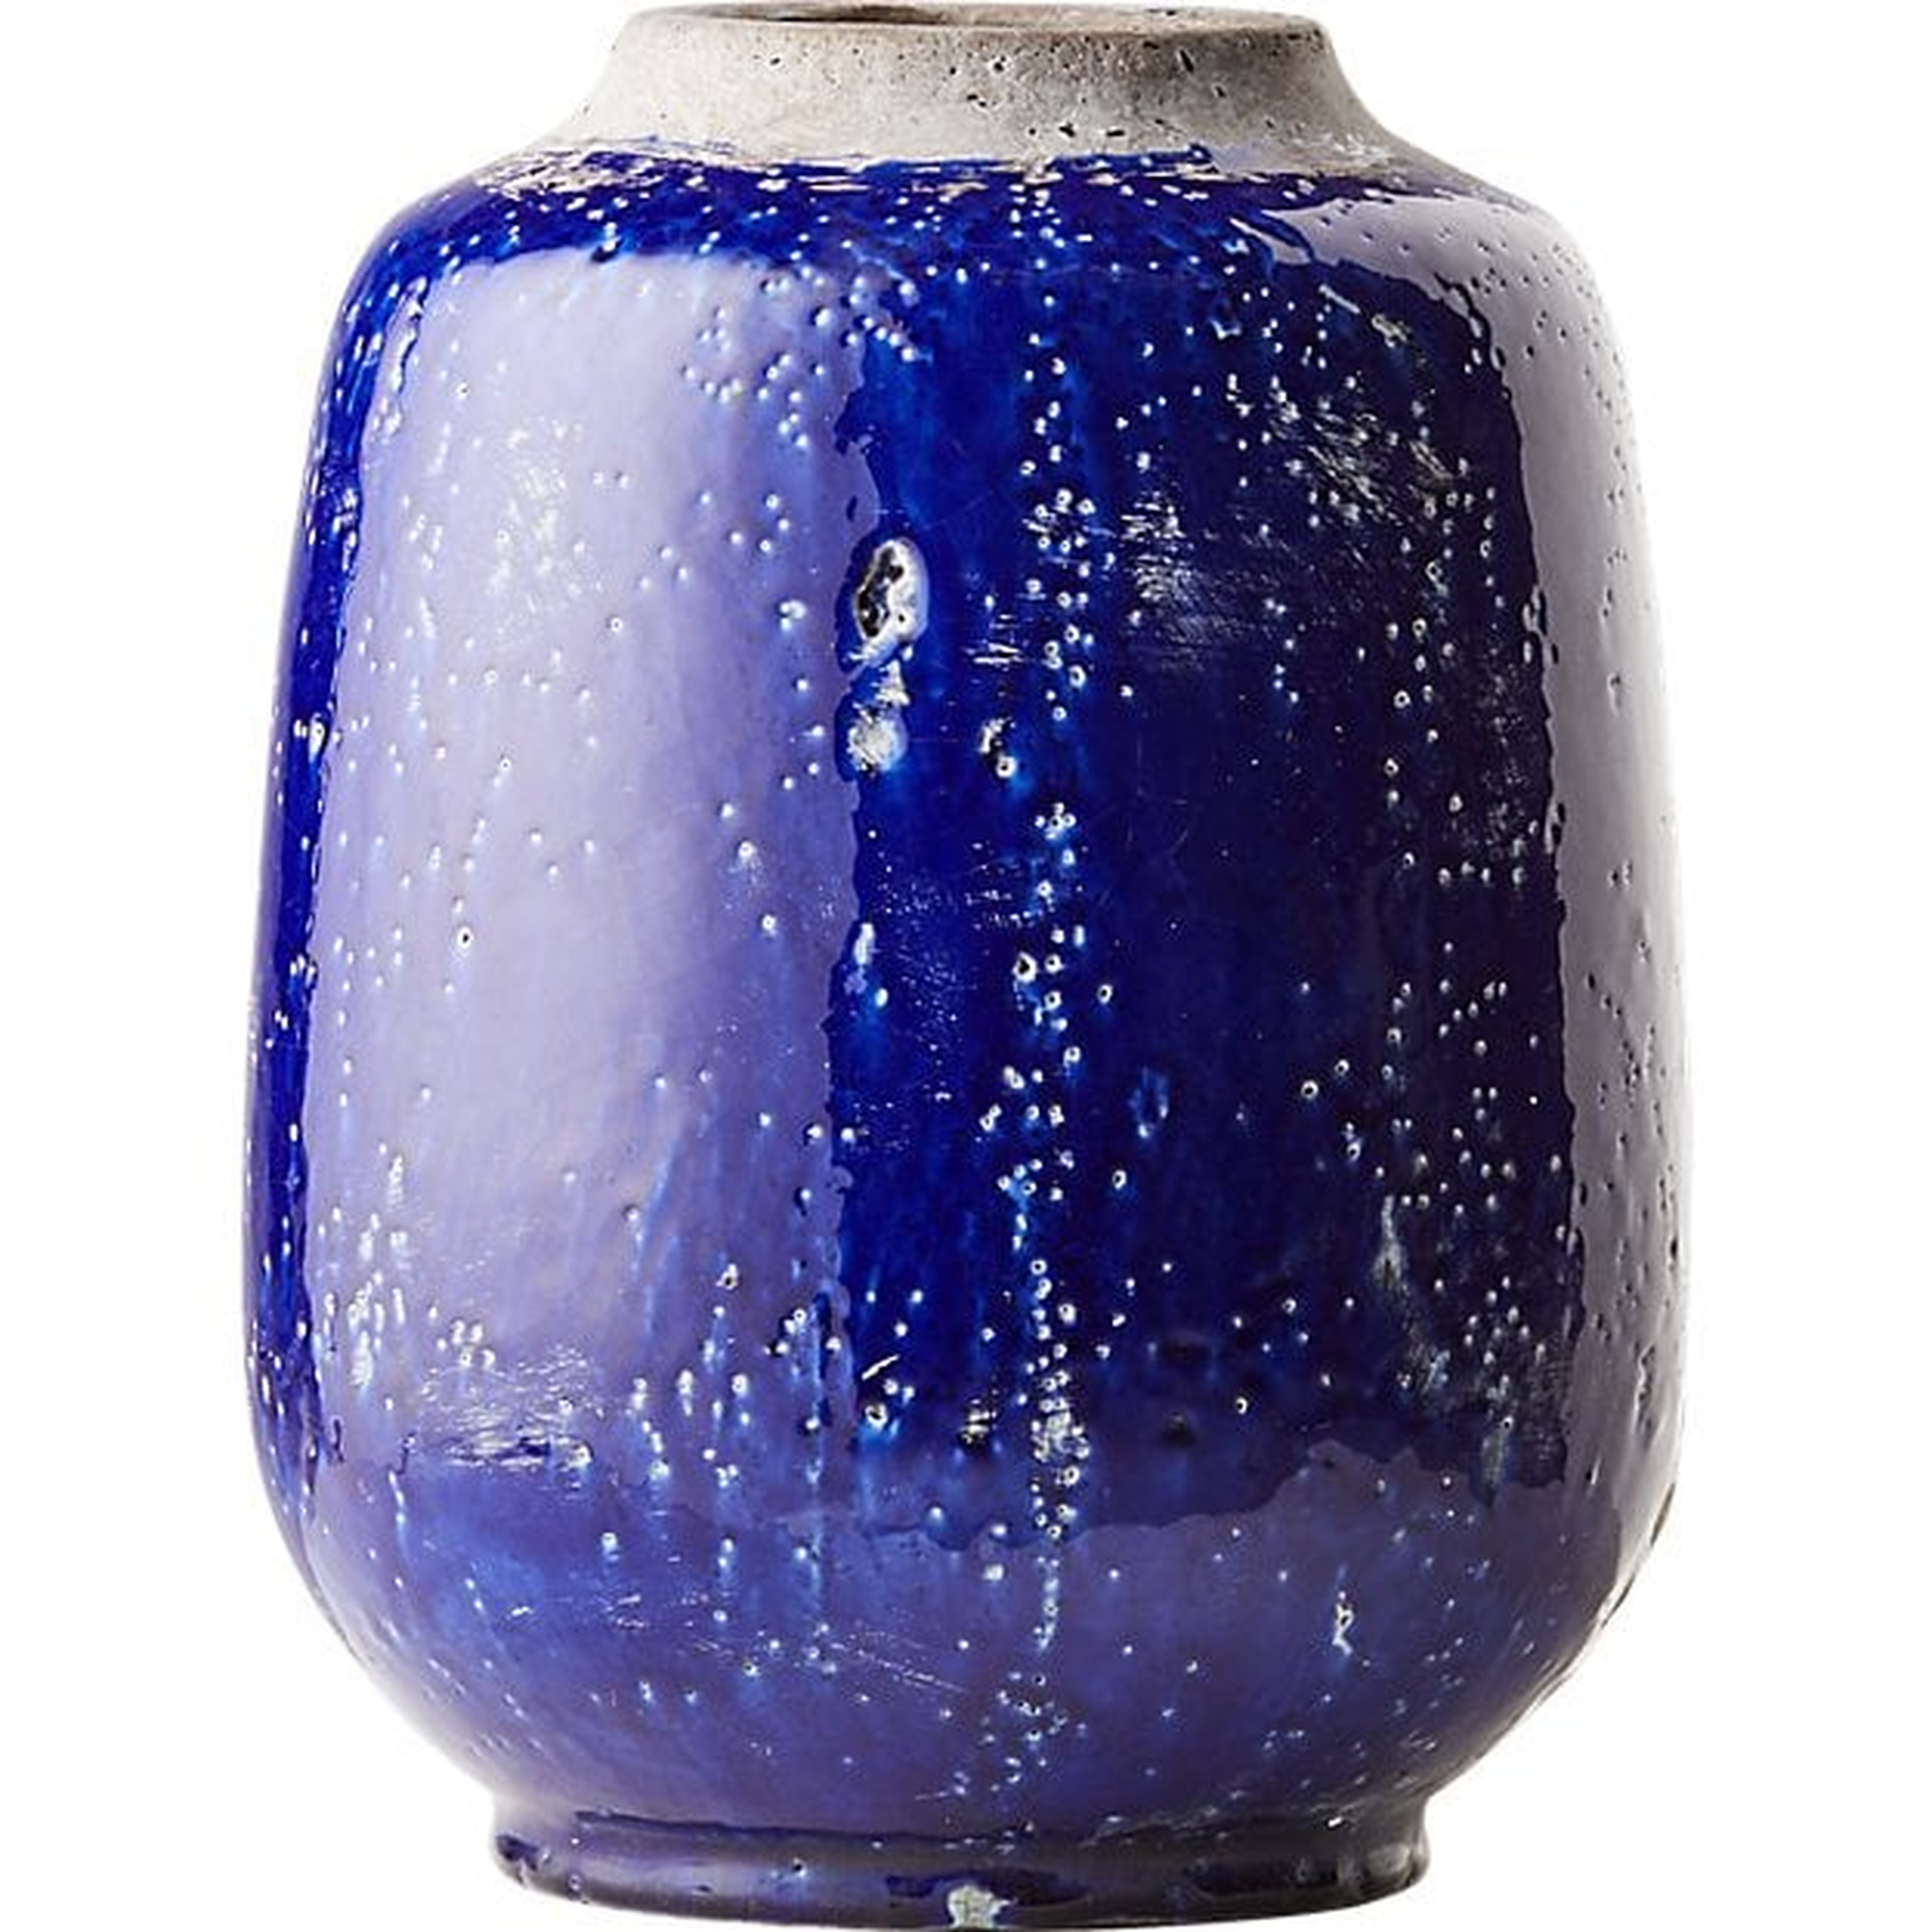 jacque blue glazed vase - CB2